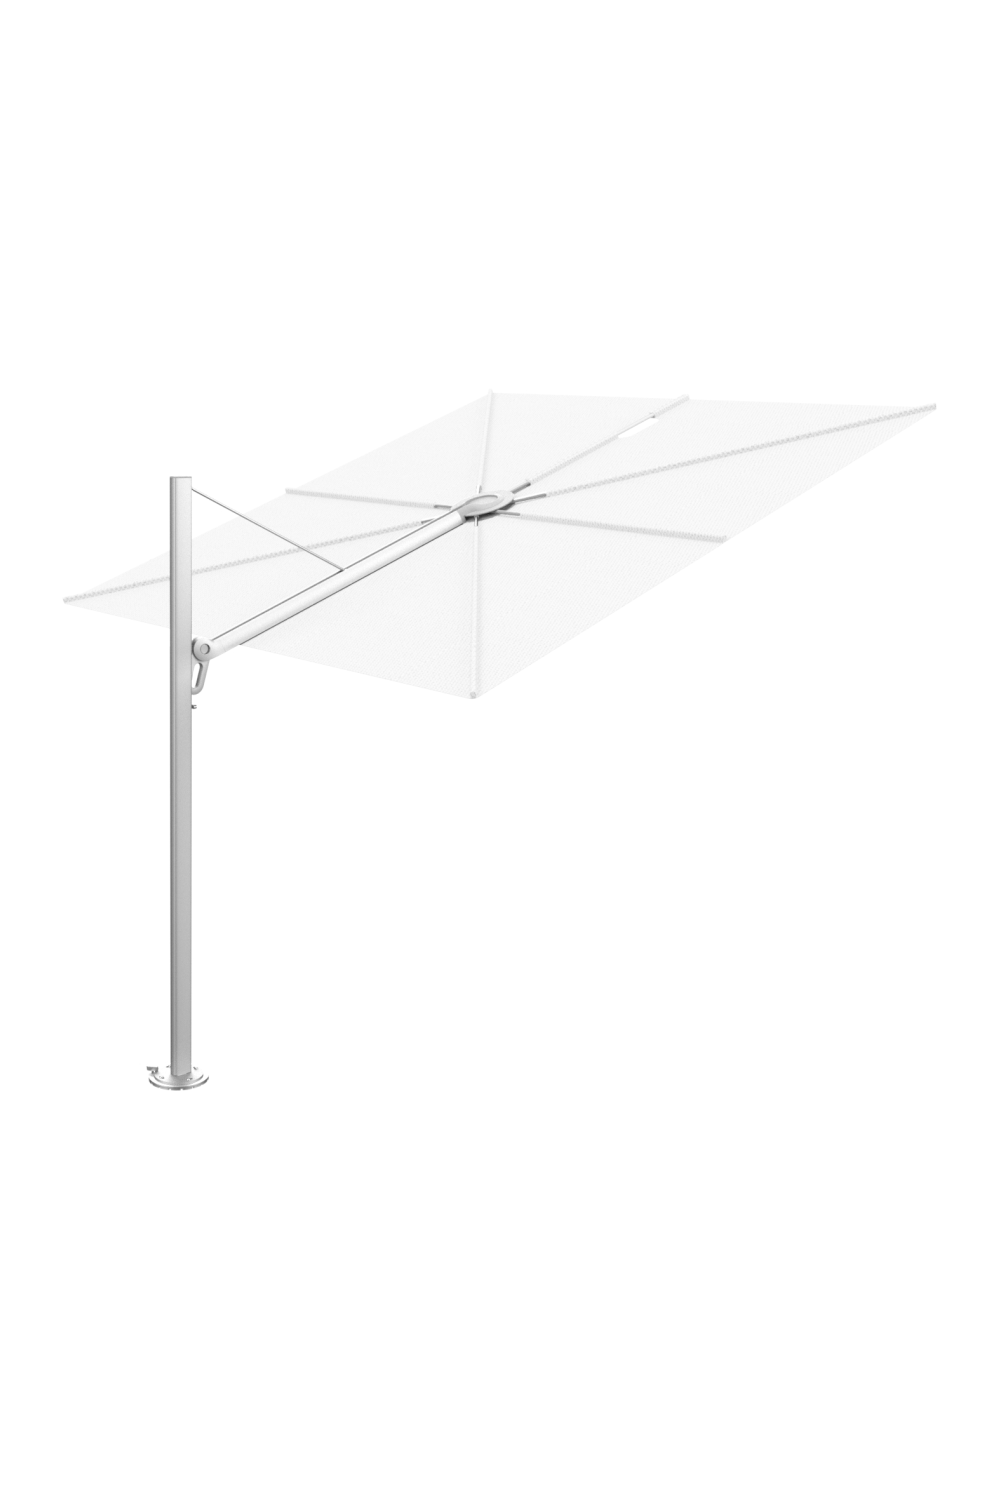 Cantilever Outdoor Umbrella ( 9’ 10’’) | Umbrosa Spectra | Oroa.com